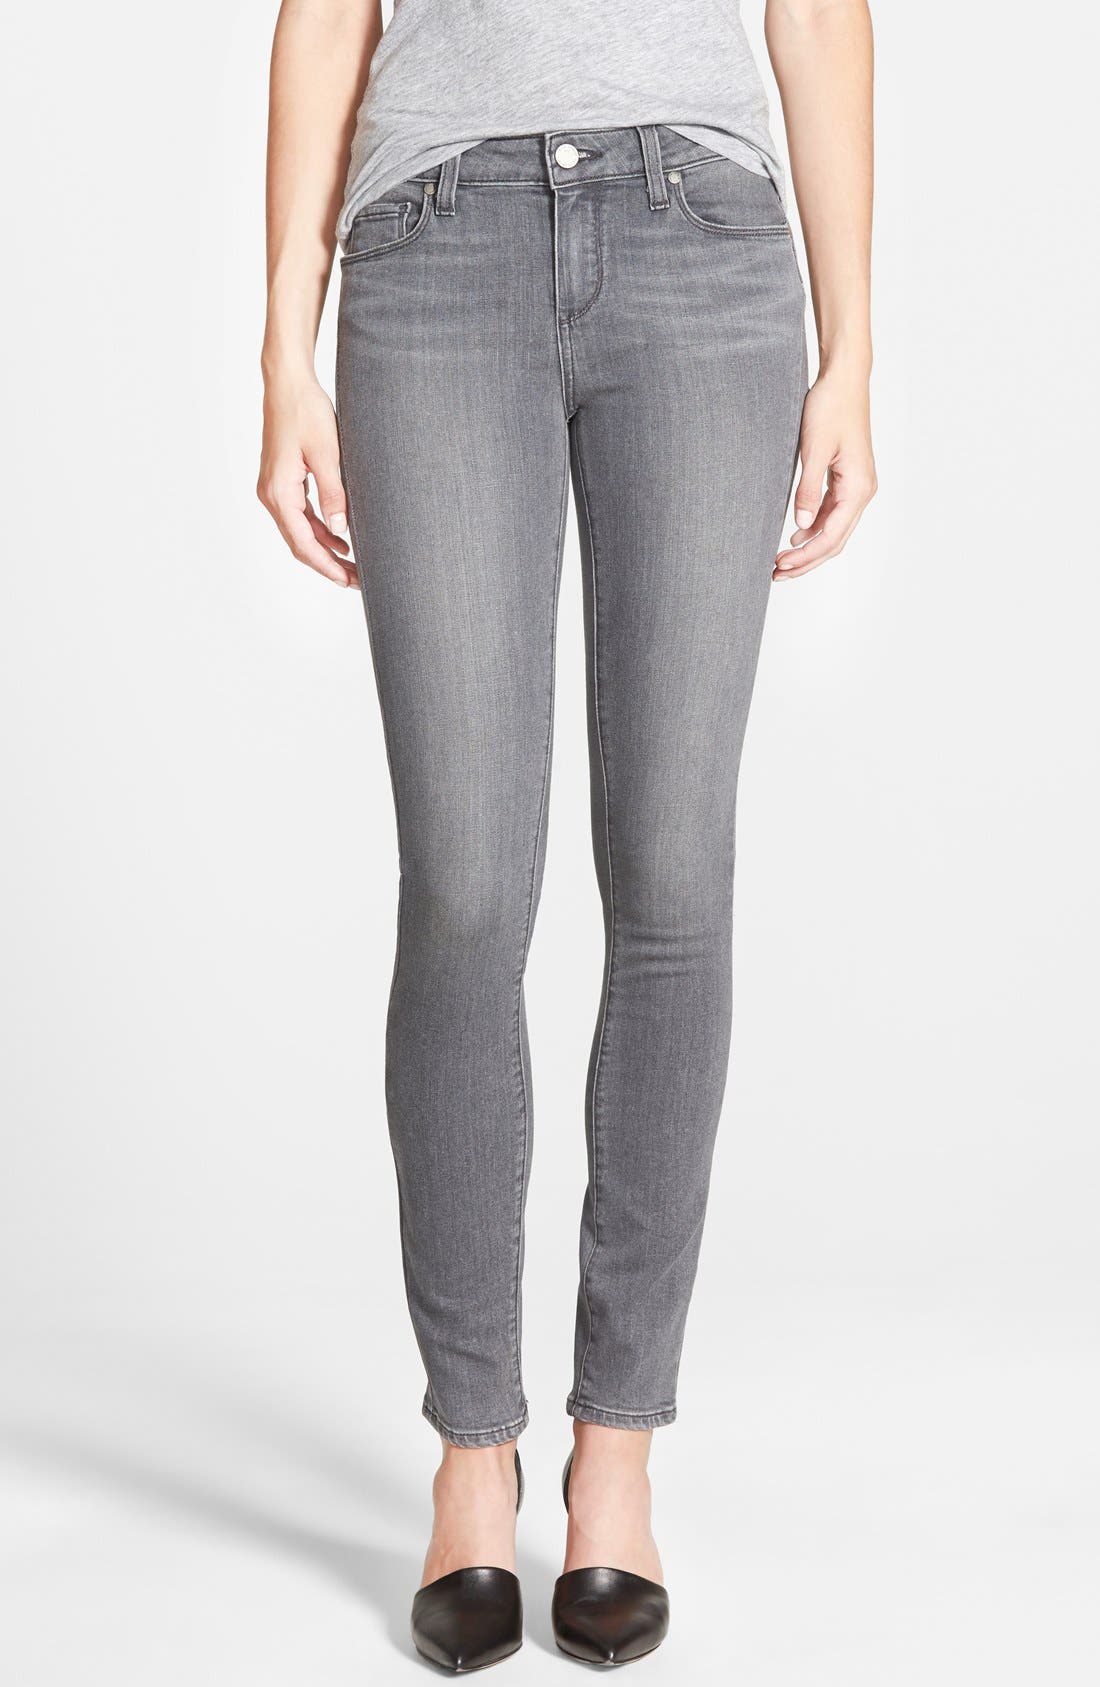 Women's Grey Wash Skinny Jeans | Nordstrom